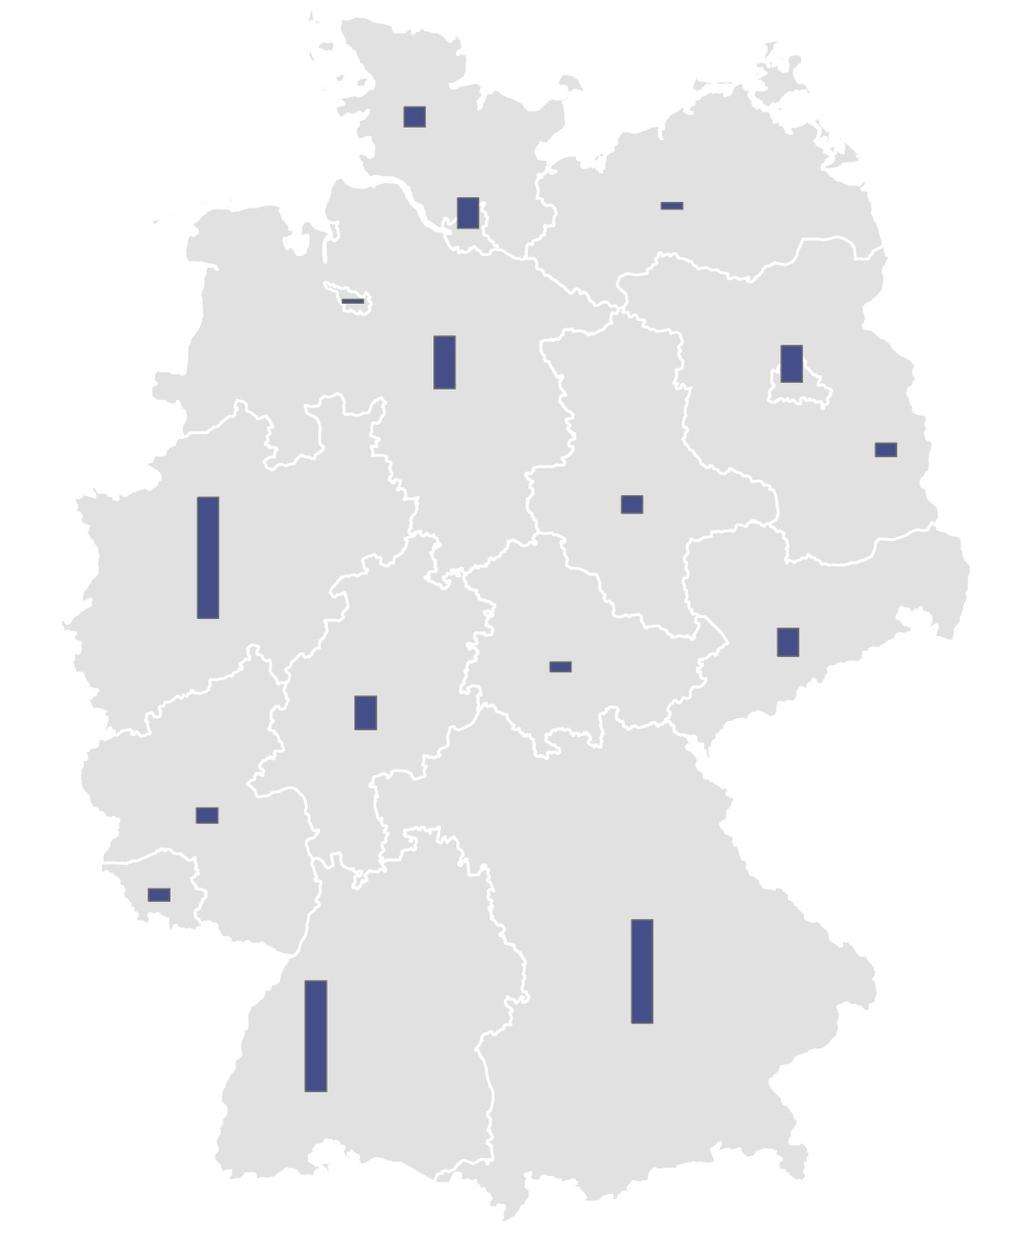 CATI, n = 2.000 / CAWI, n = 3.000 BadenWürttemberg 824.376 Bayern 774.810 Berlin 272.605 Brandenburg 99.286 Bremen 28.